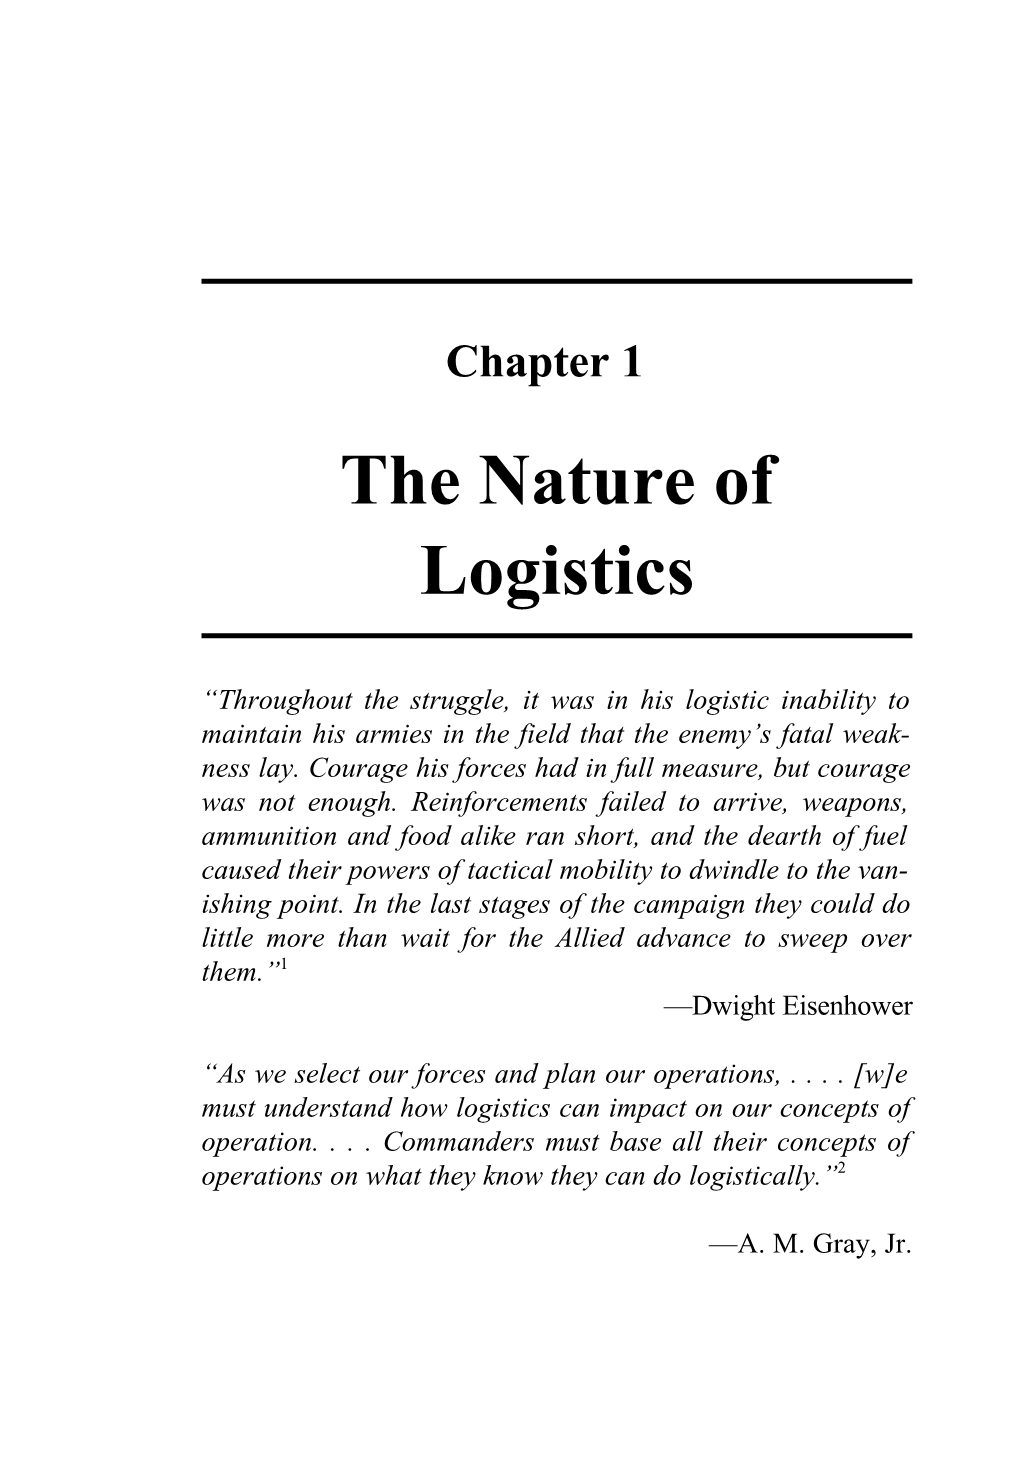 The Nature of Logistics